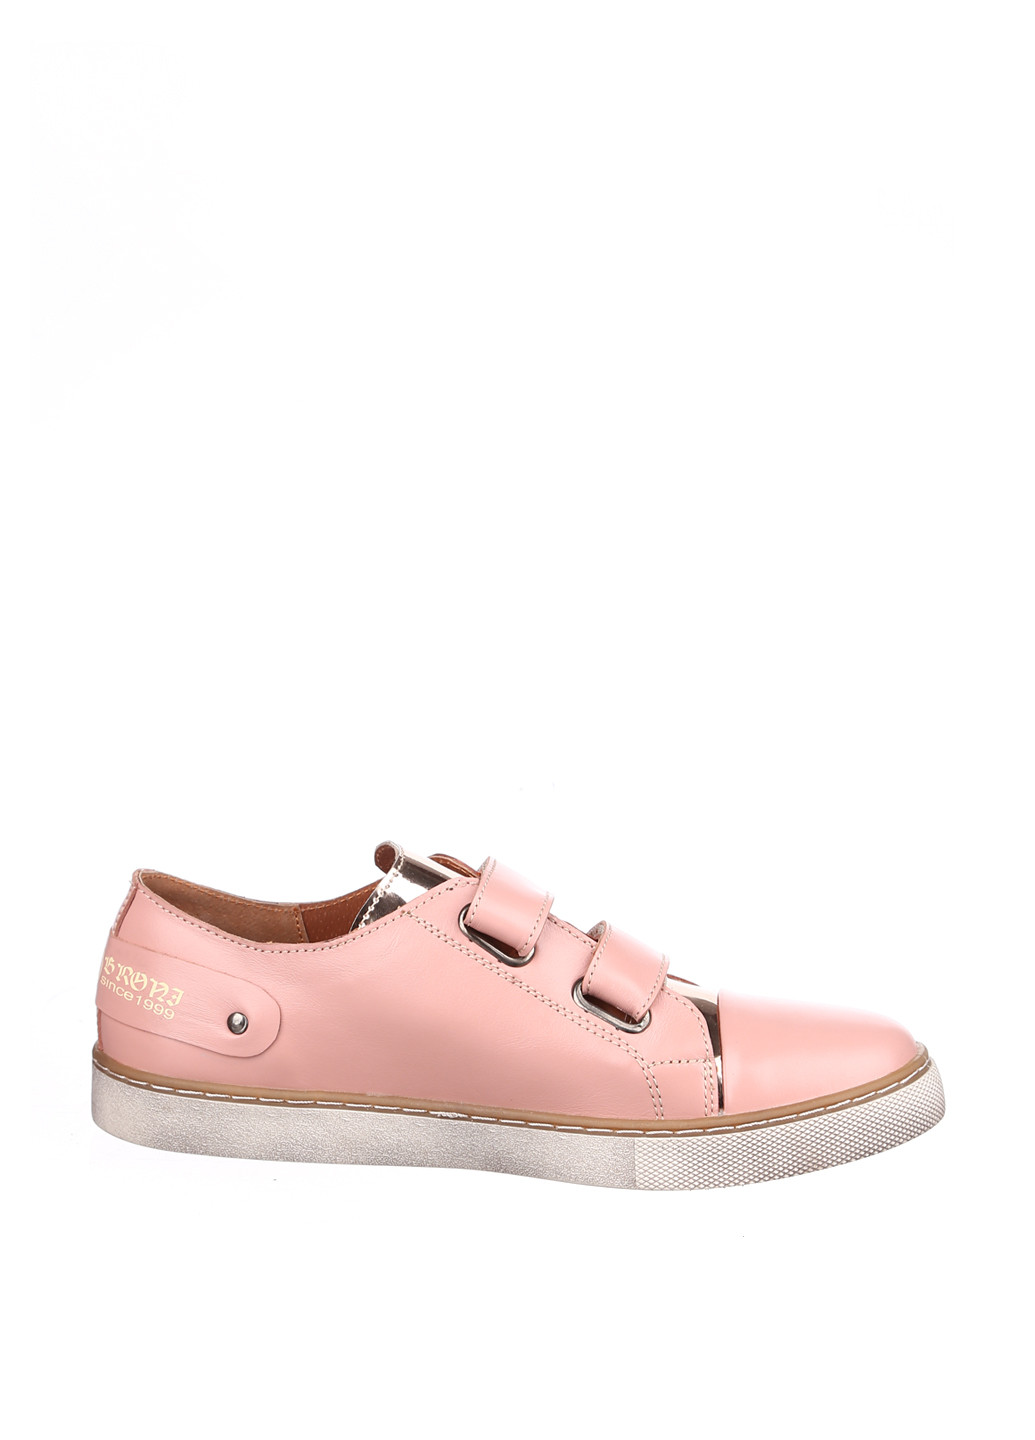 Розово-коричневые туфли без каблука Broni